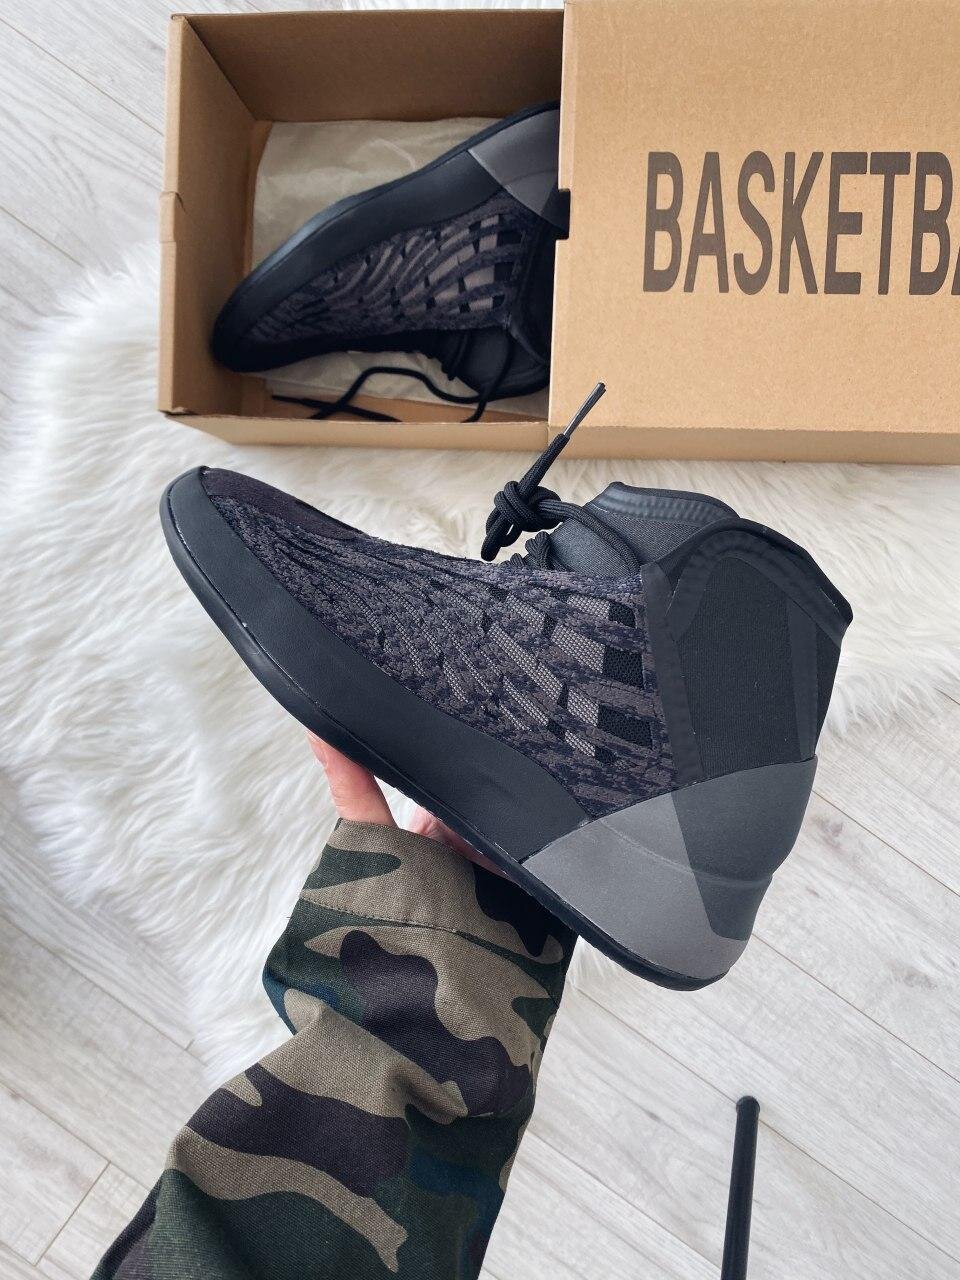 Adidas Yeezy Basketball Triple Black 